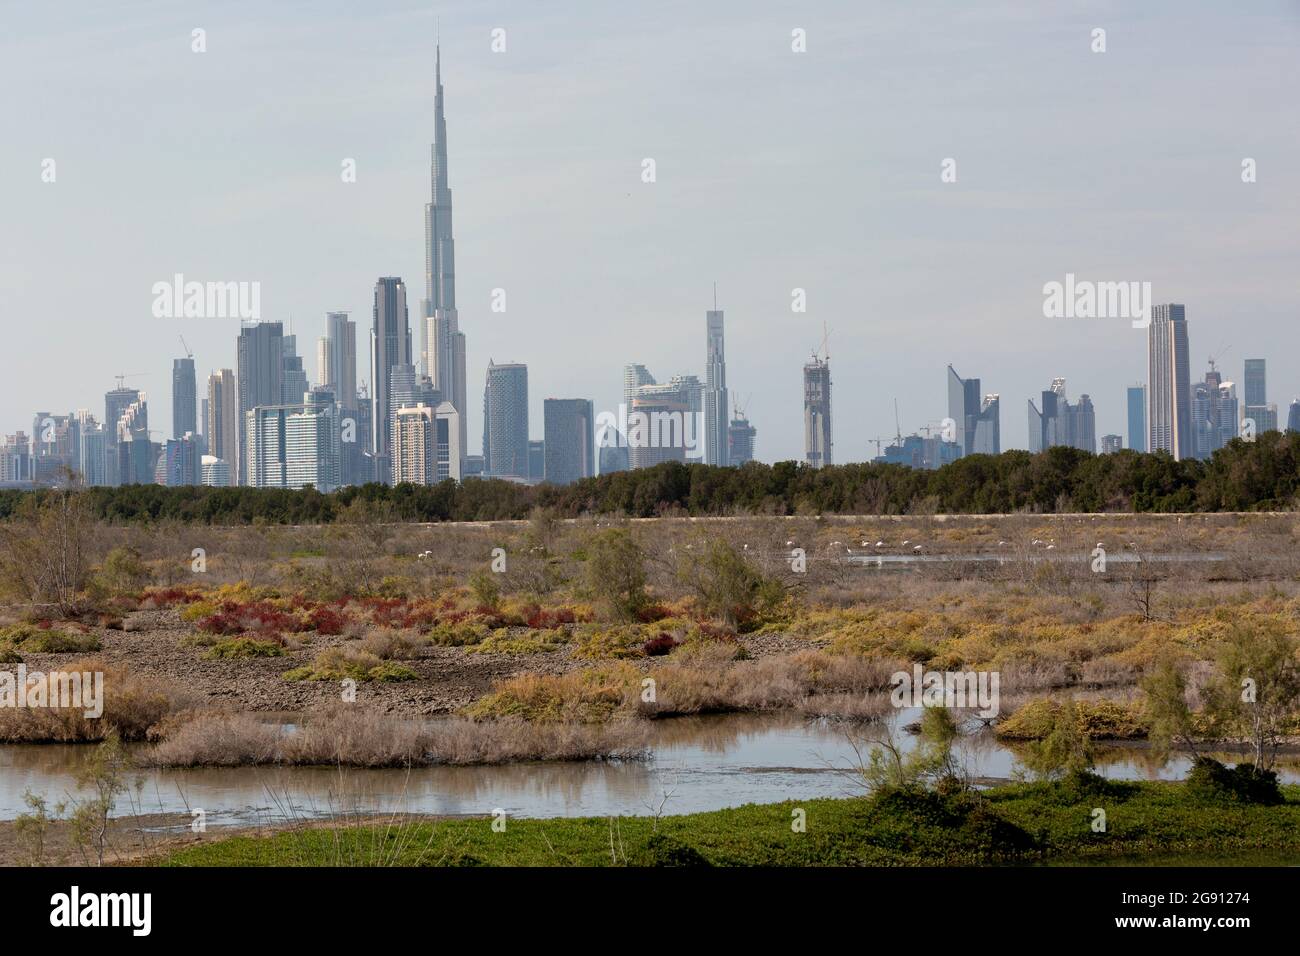 The impressive skyline of downtown Dubai with the world's highest building Burj Khalifa as seen from the nature reserve Ras al Khor. Stock Photo